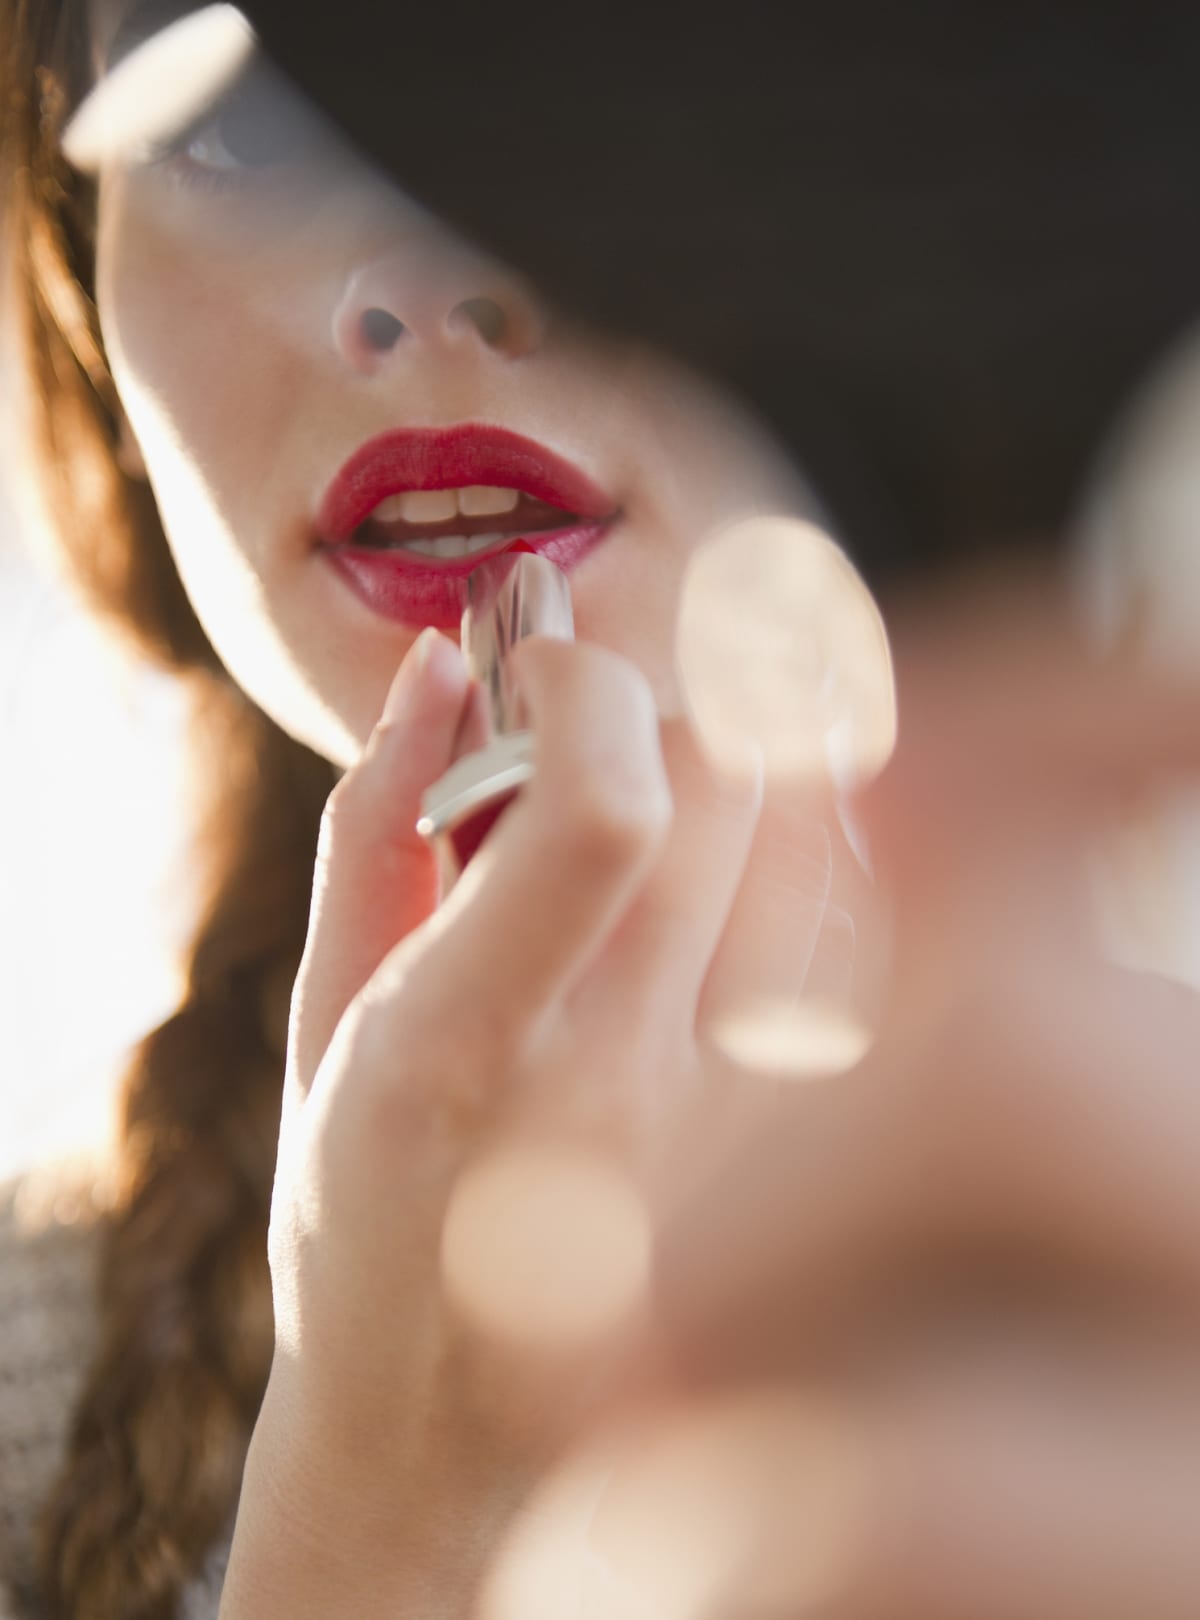 a woman wearing red lipstick